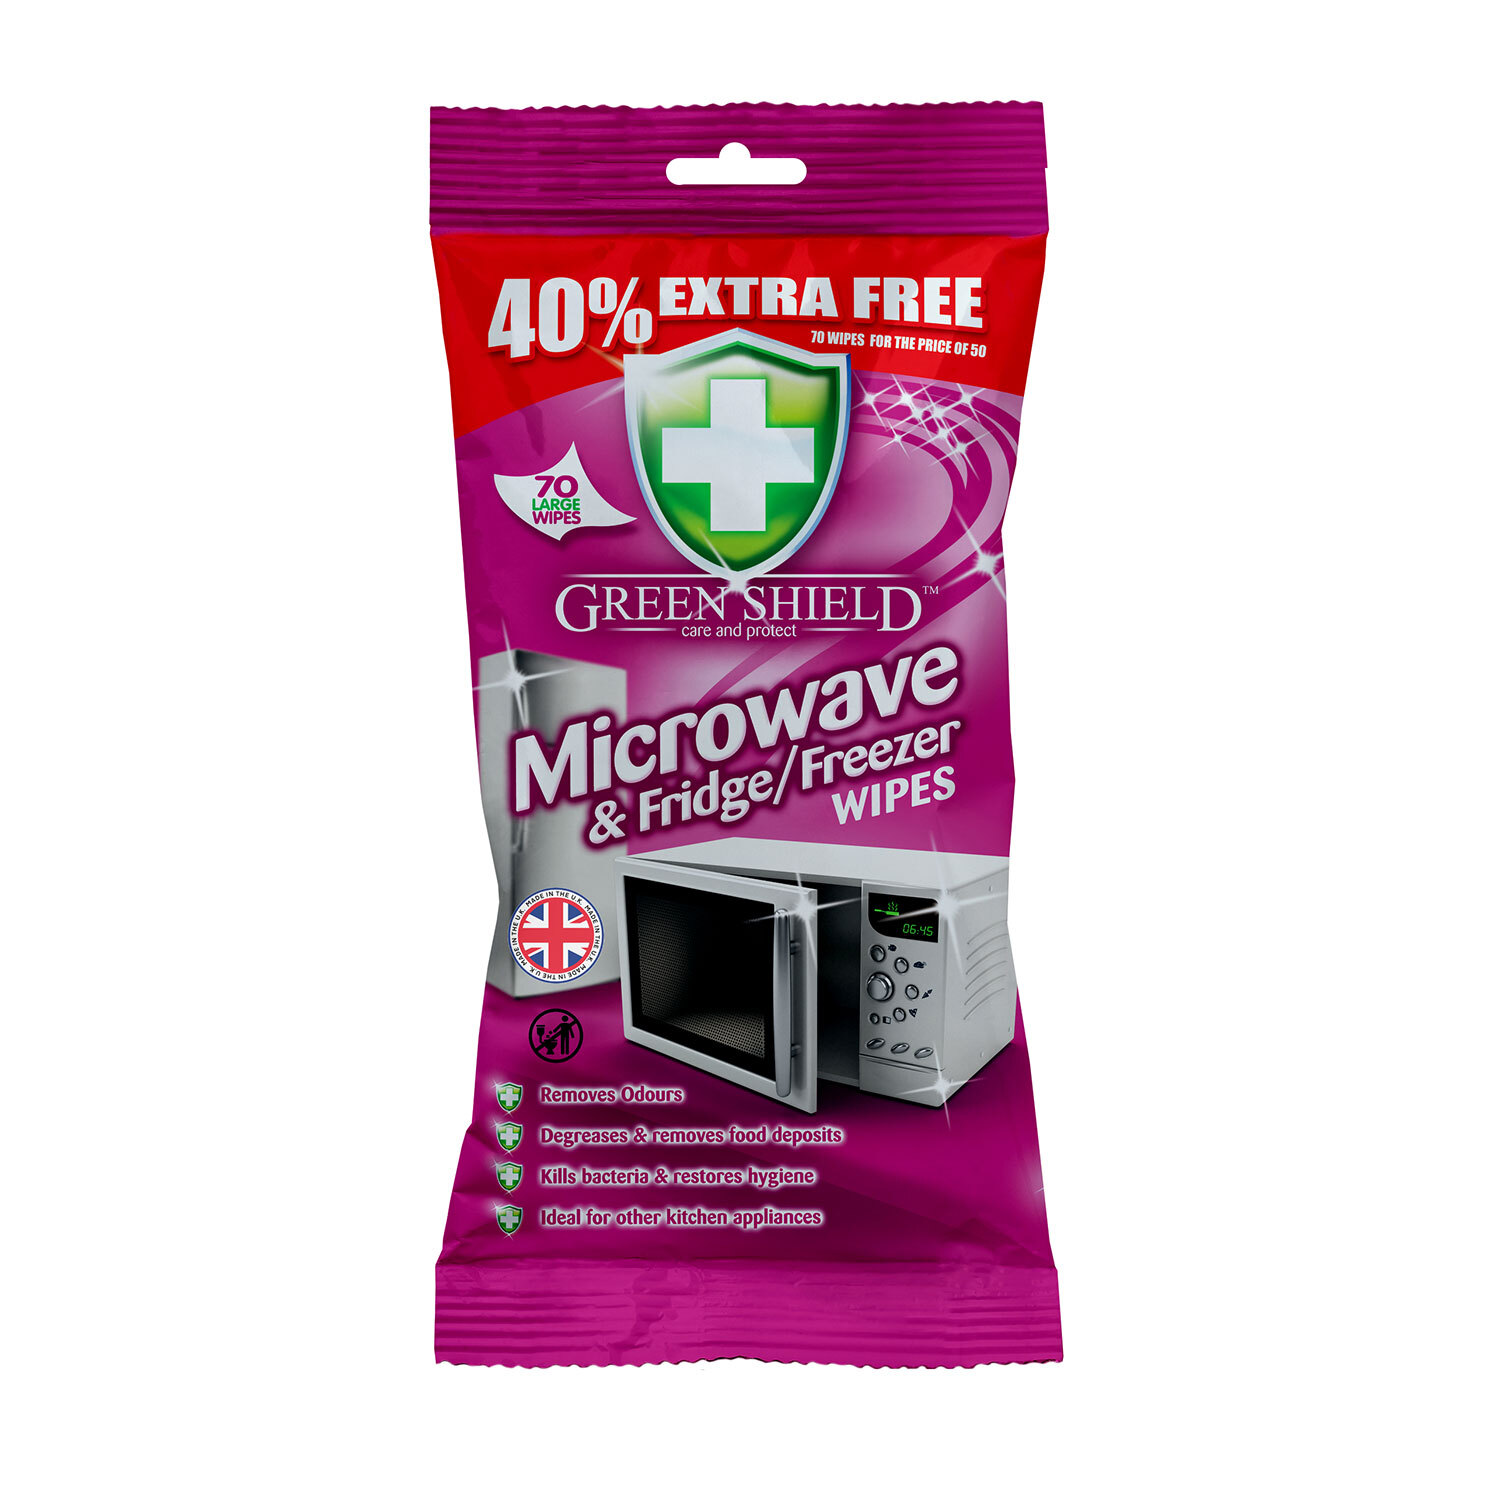 Greenshield Microwave and Fridge Freezer Wipes Image